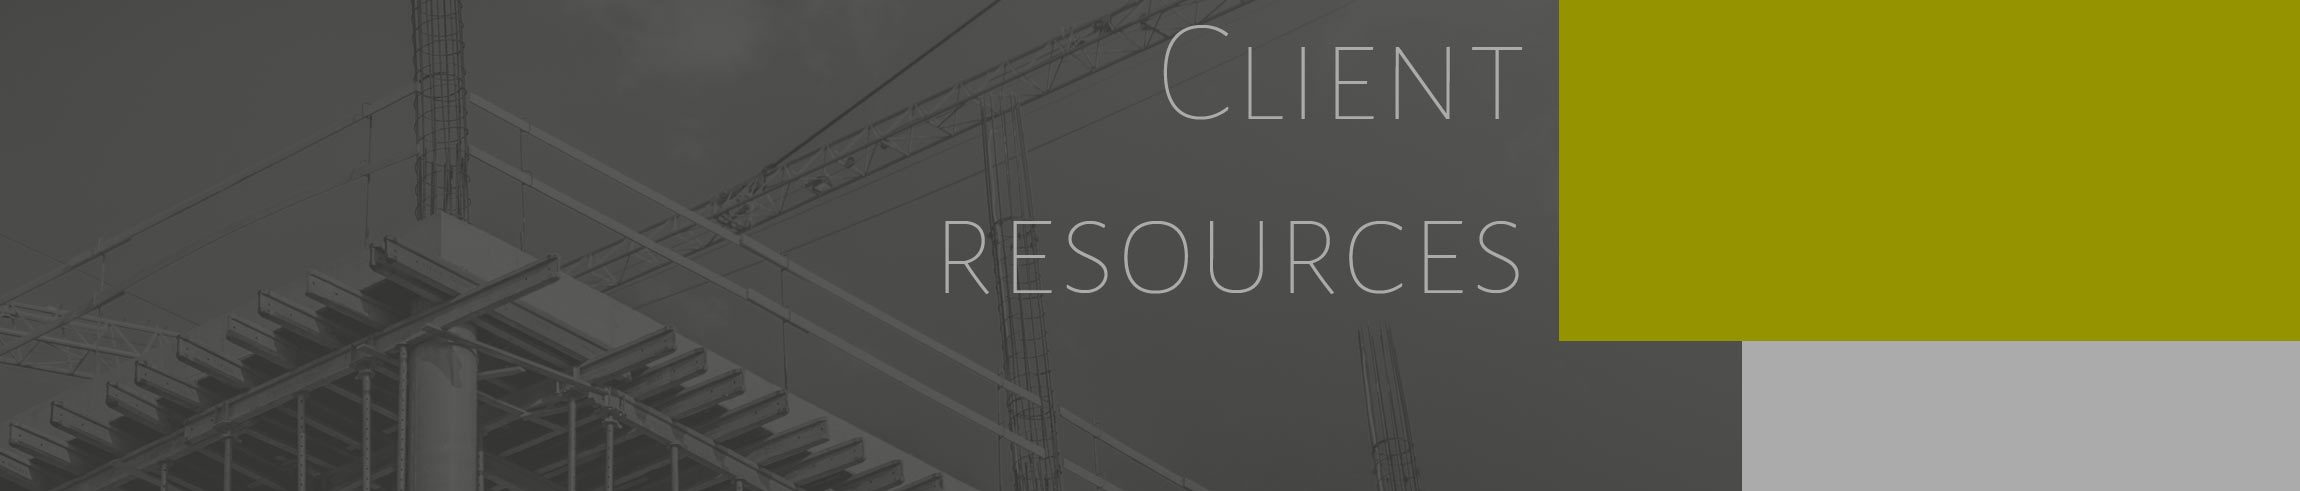 Client-Resources Header Image